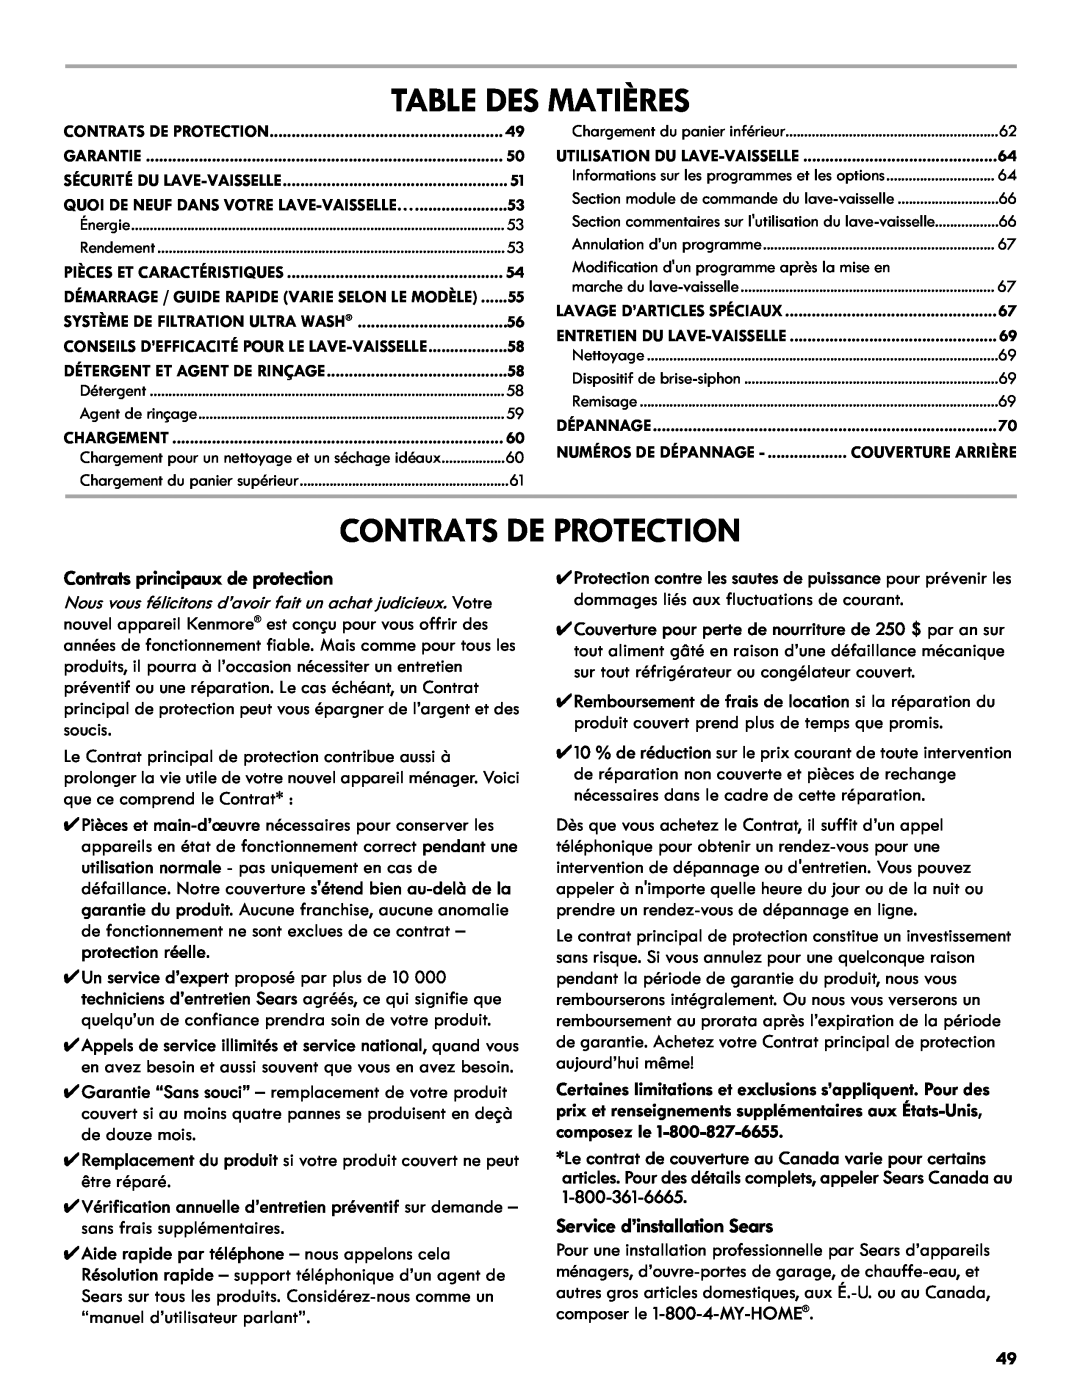 Kenmore 665.1301 manual Table Des Matières, Contrats De Protection, Contrats principaux de protection 